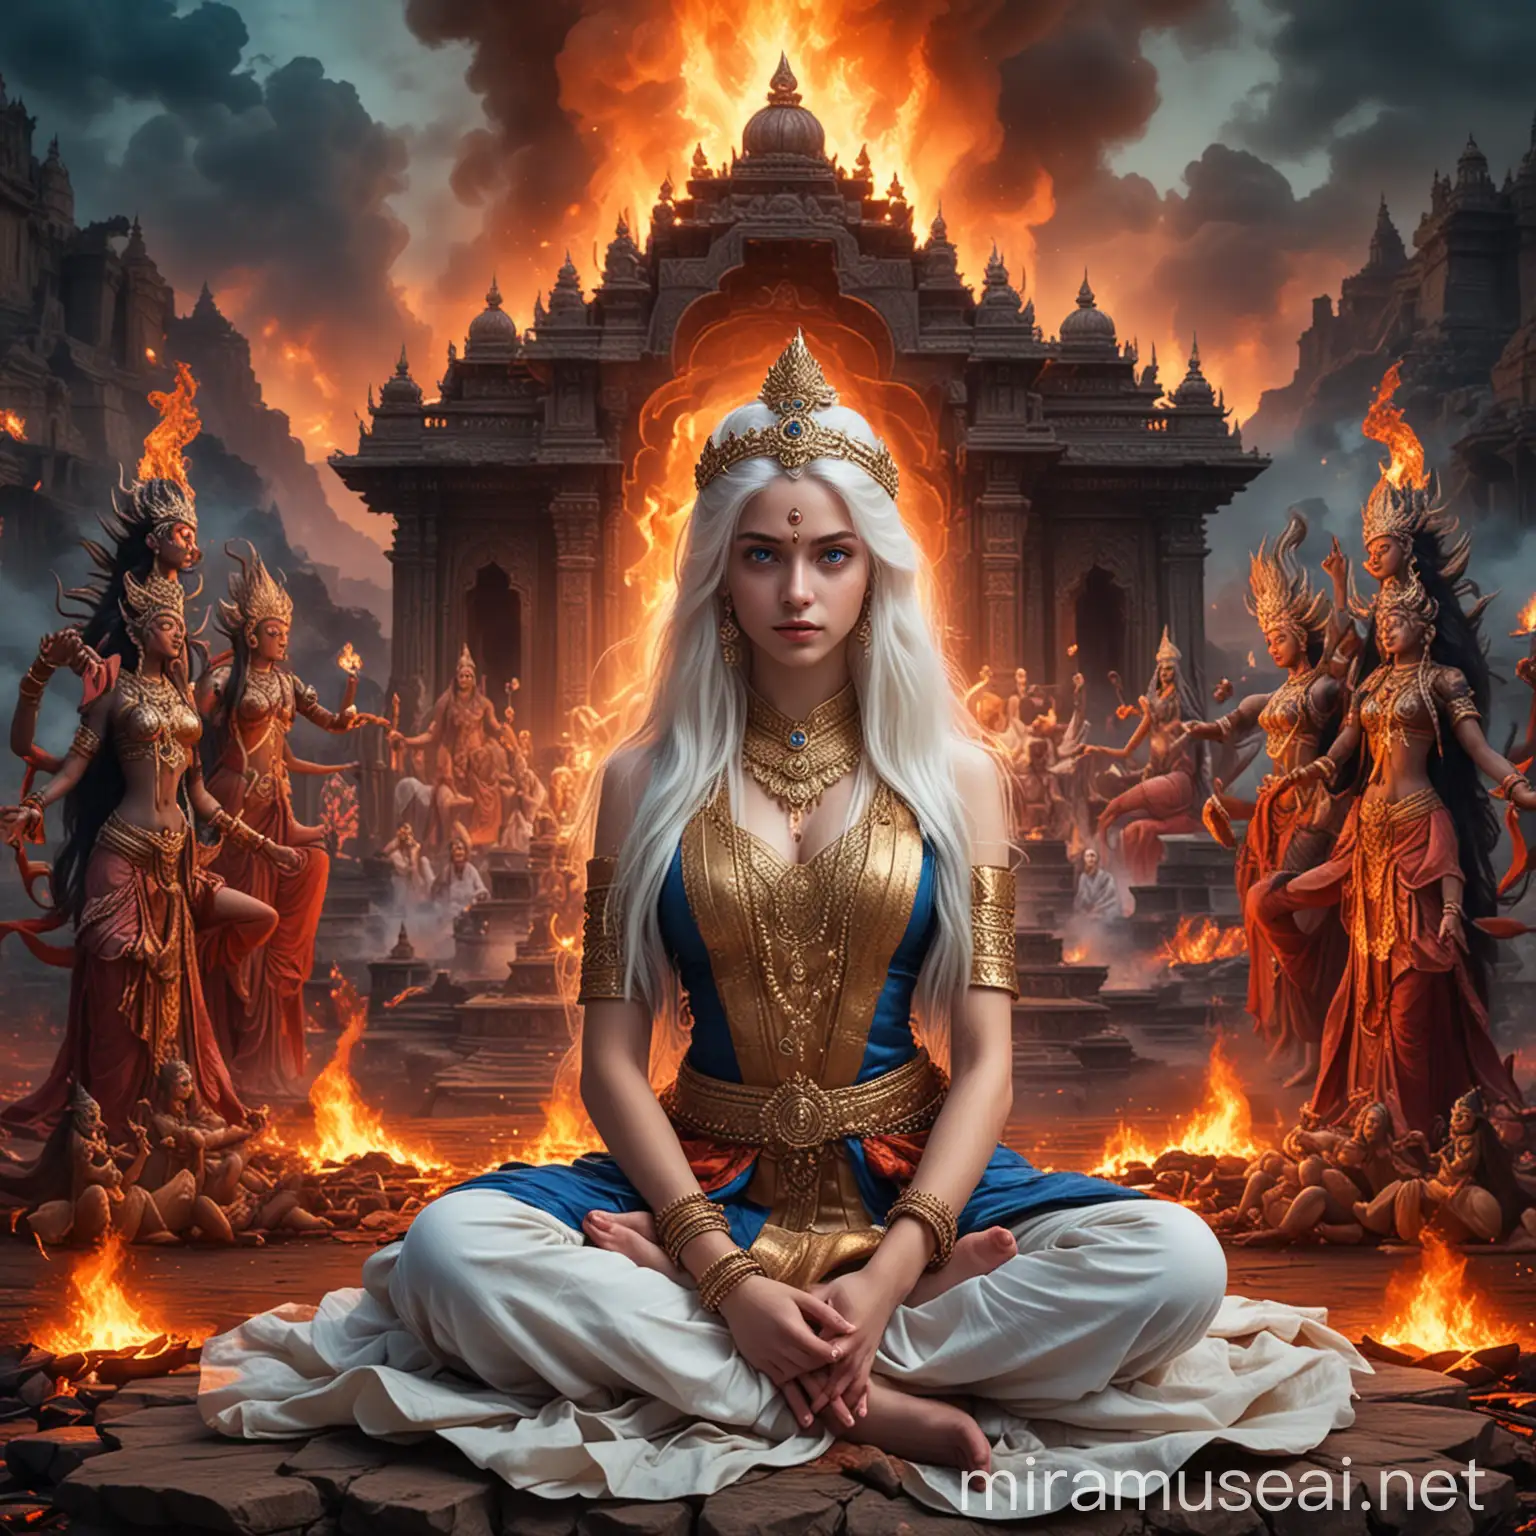 Majestic Teenage Empress in Hindu Battle Regalia Amidst Divine Inferno